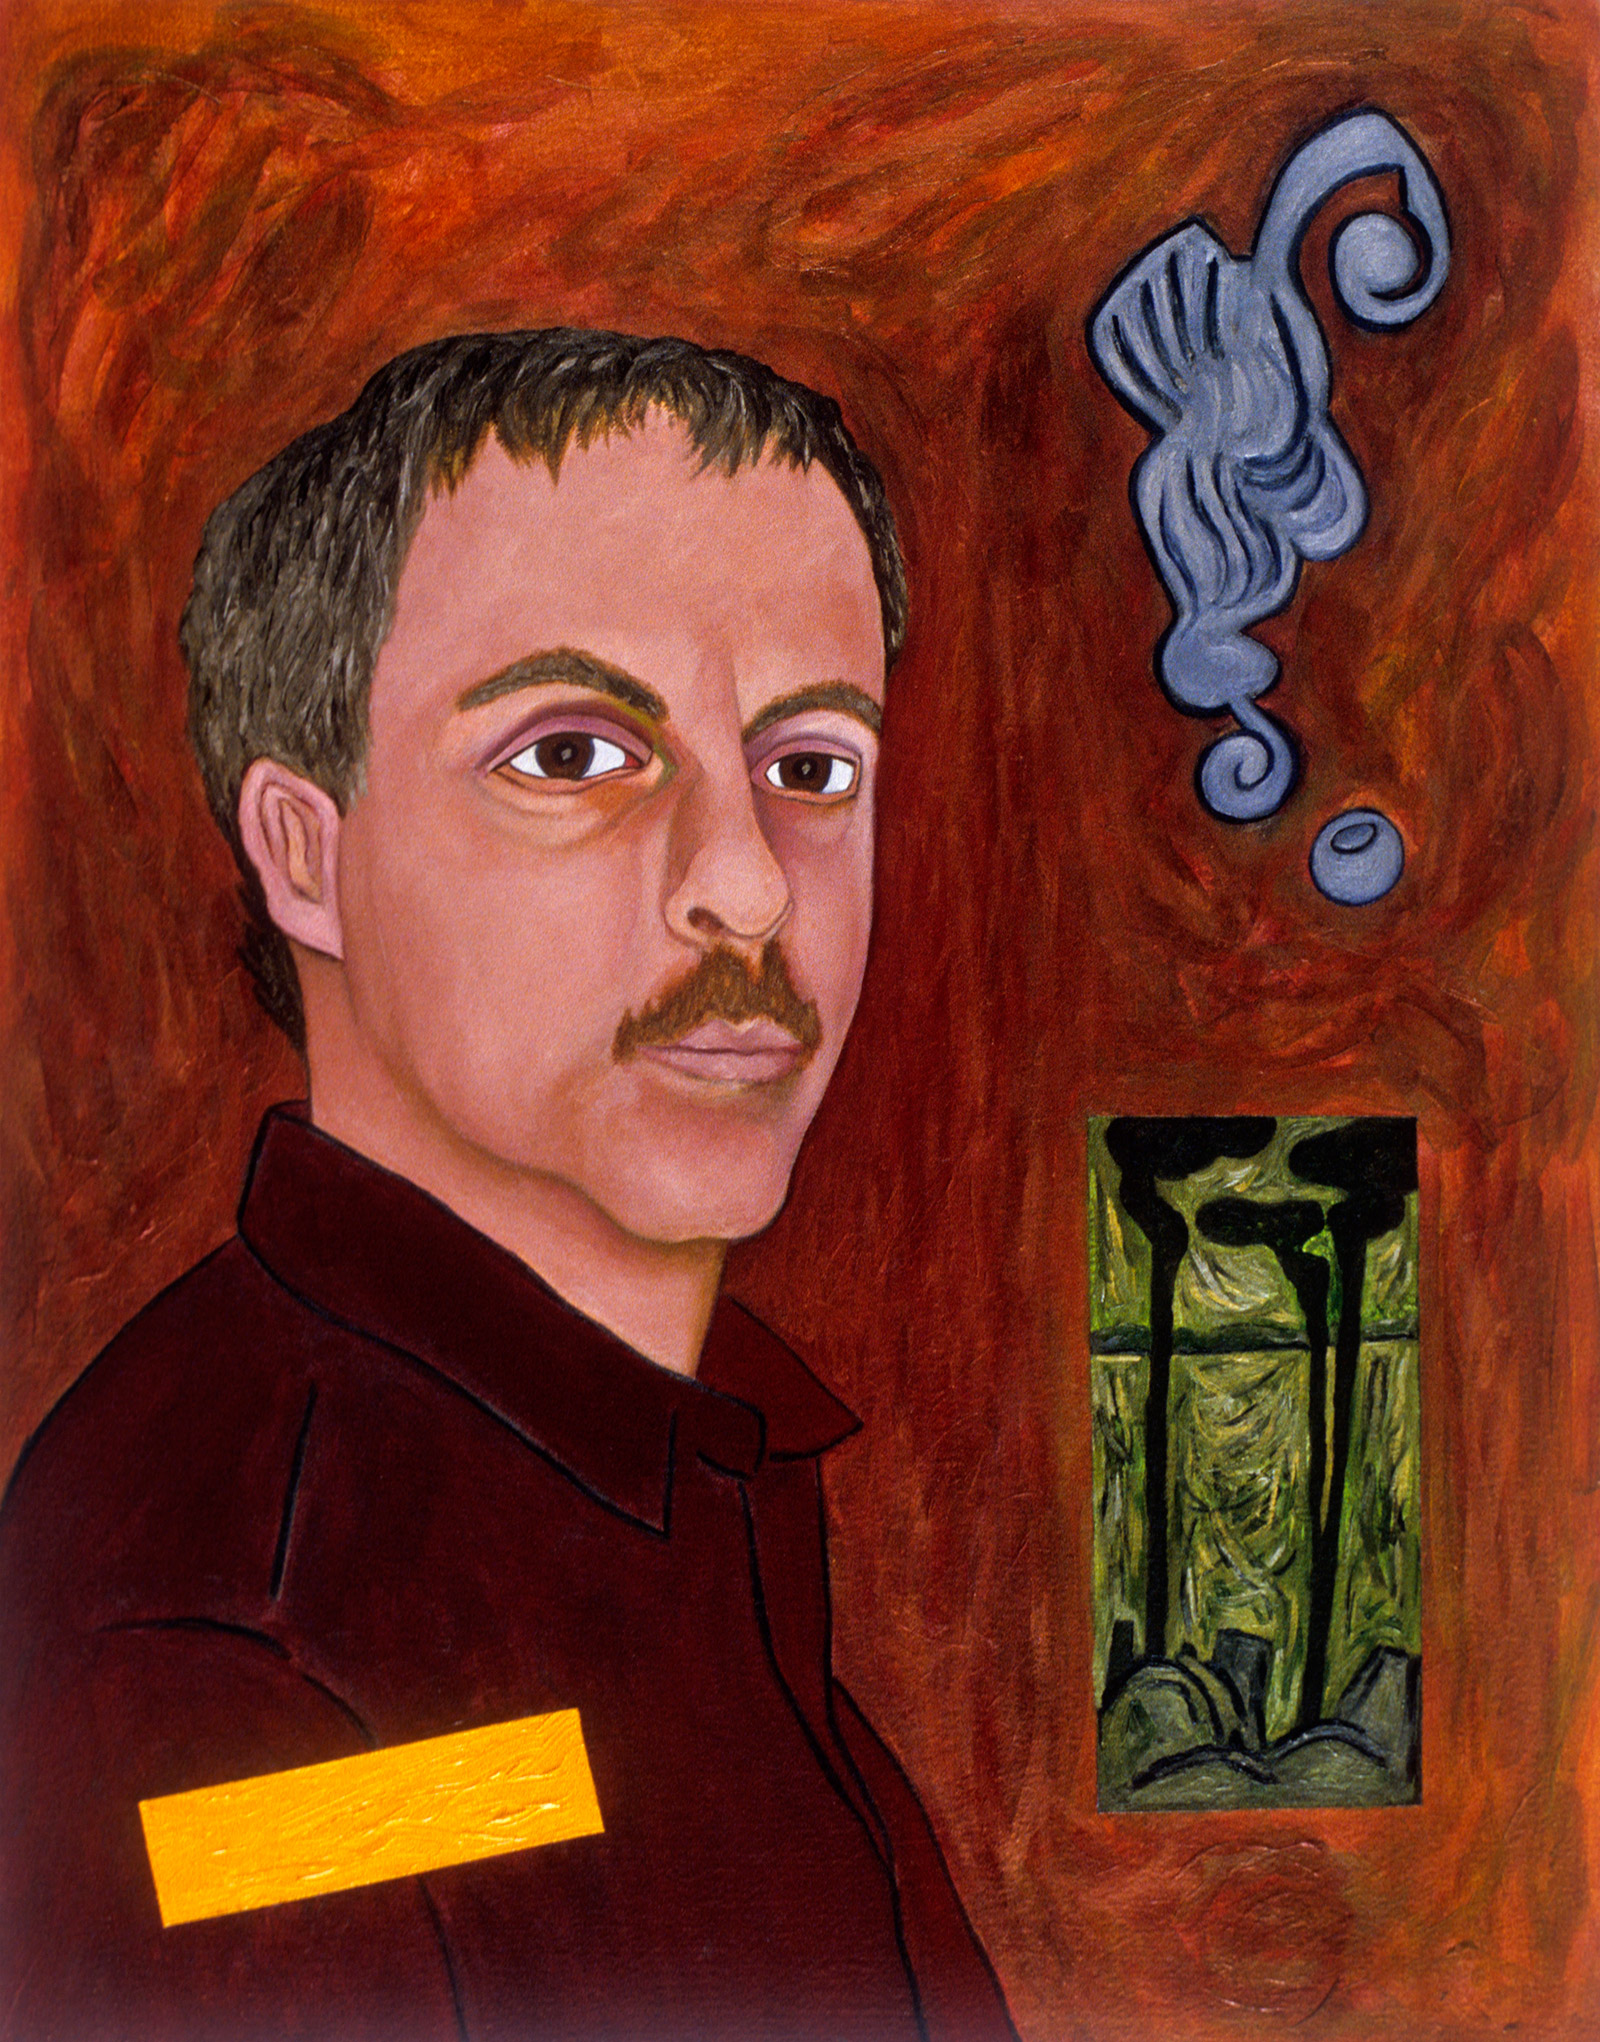 Alan, 2002 | 26" x 20" | Oil & Acrylic on Canvas | Collection of Alan Zindman